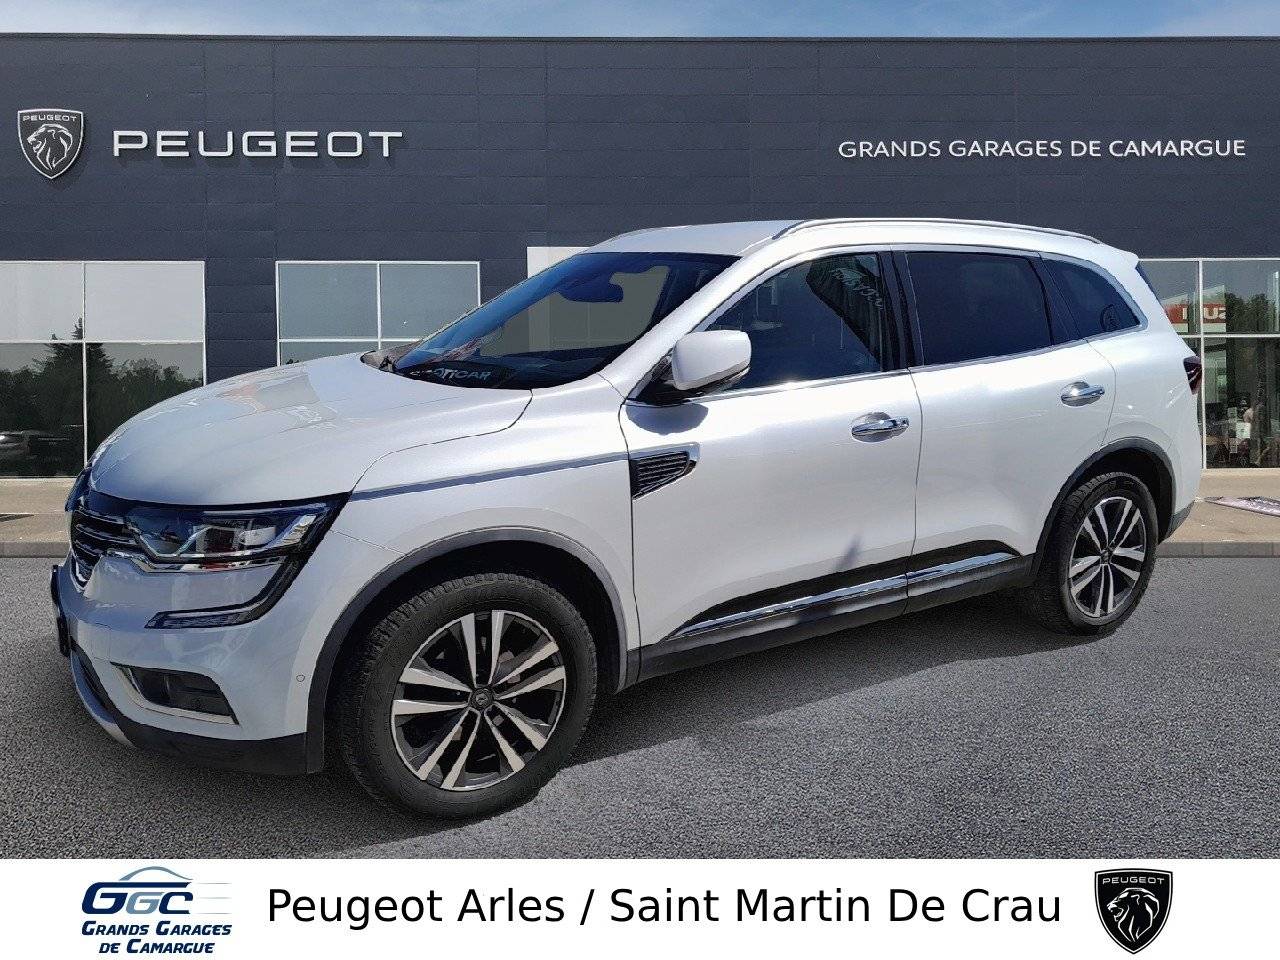 RENAULT KOLEOS | Koleos dCi 130 4x2 Energy occasion - Peugeot Arles